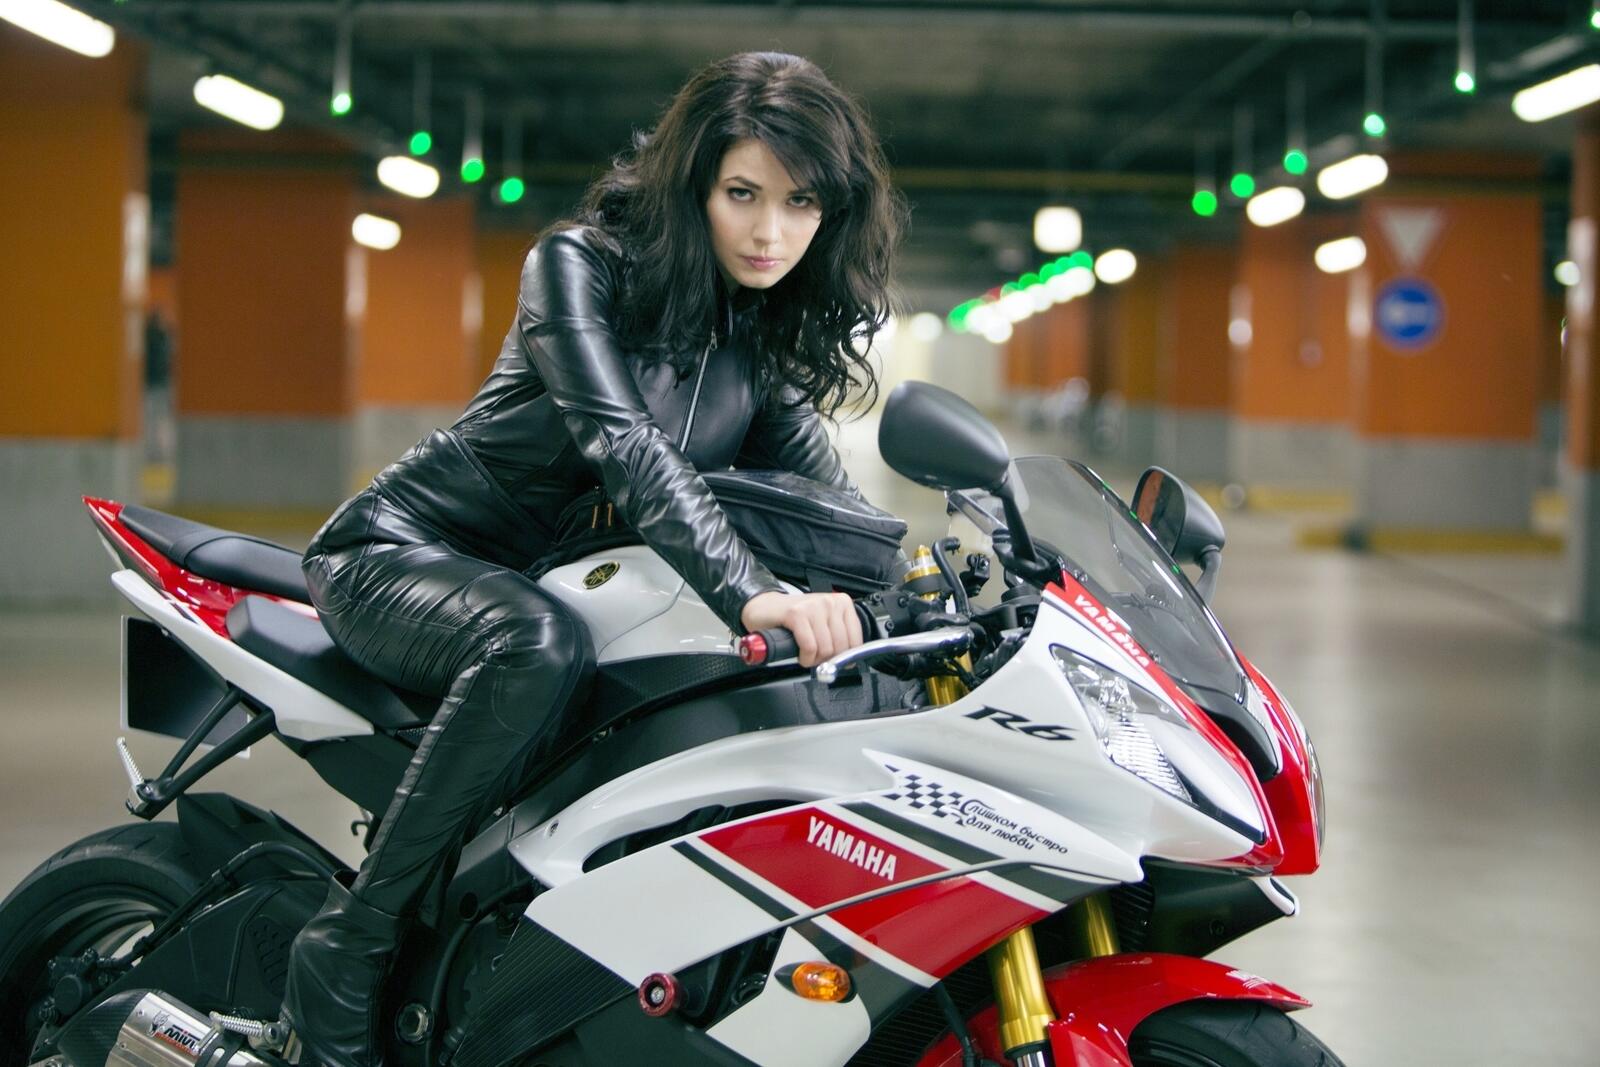 Wallpapers yuliya snigir motorcycle actress on the desktop